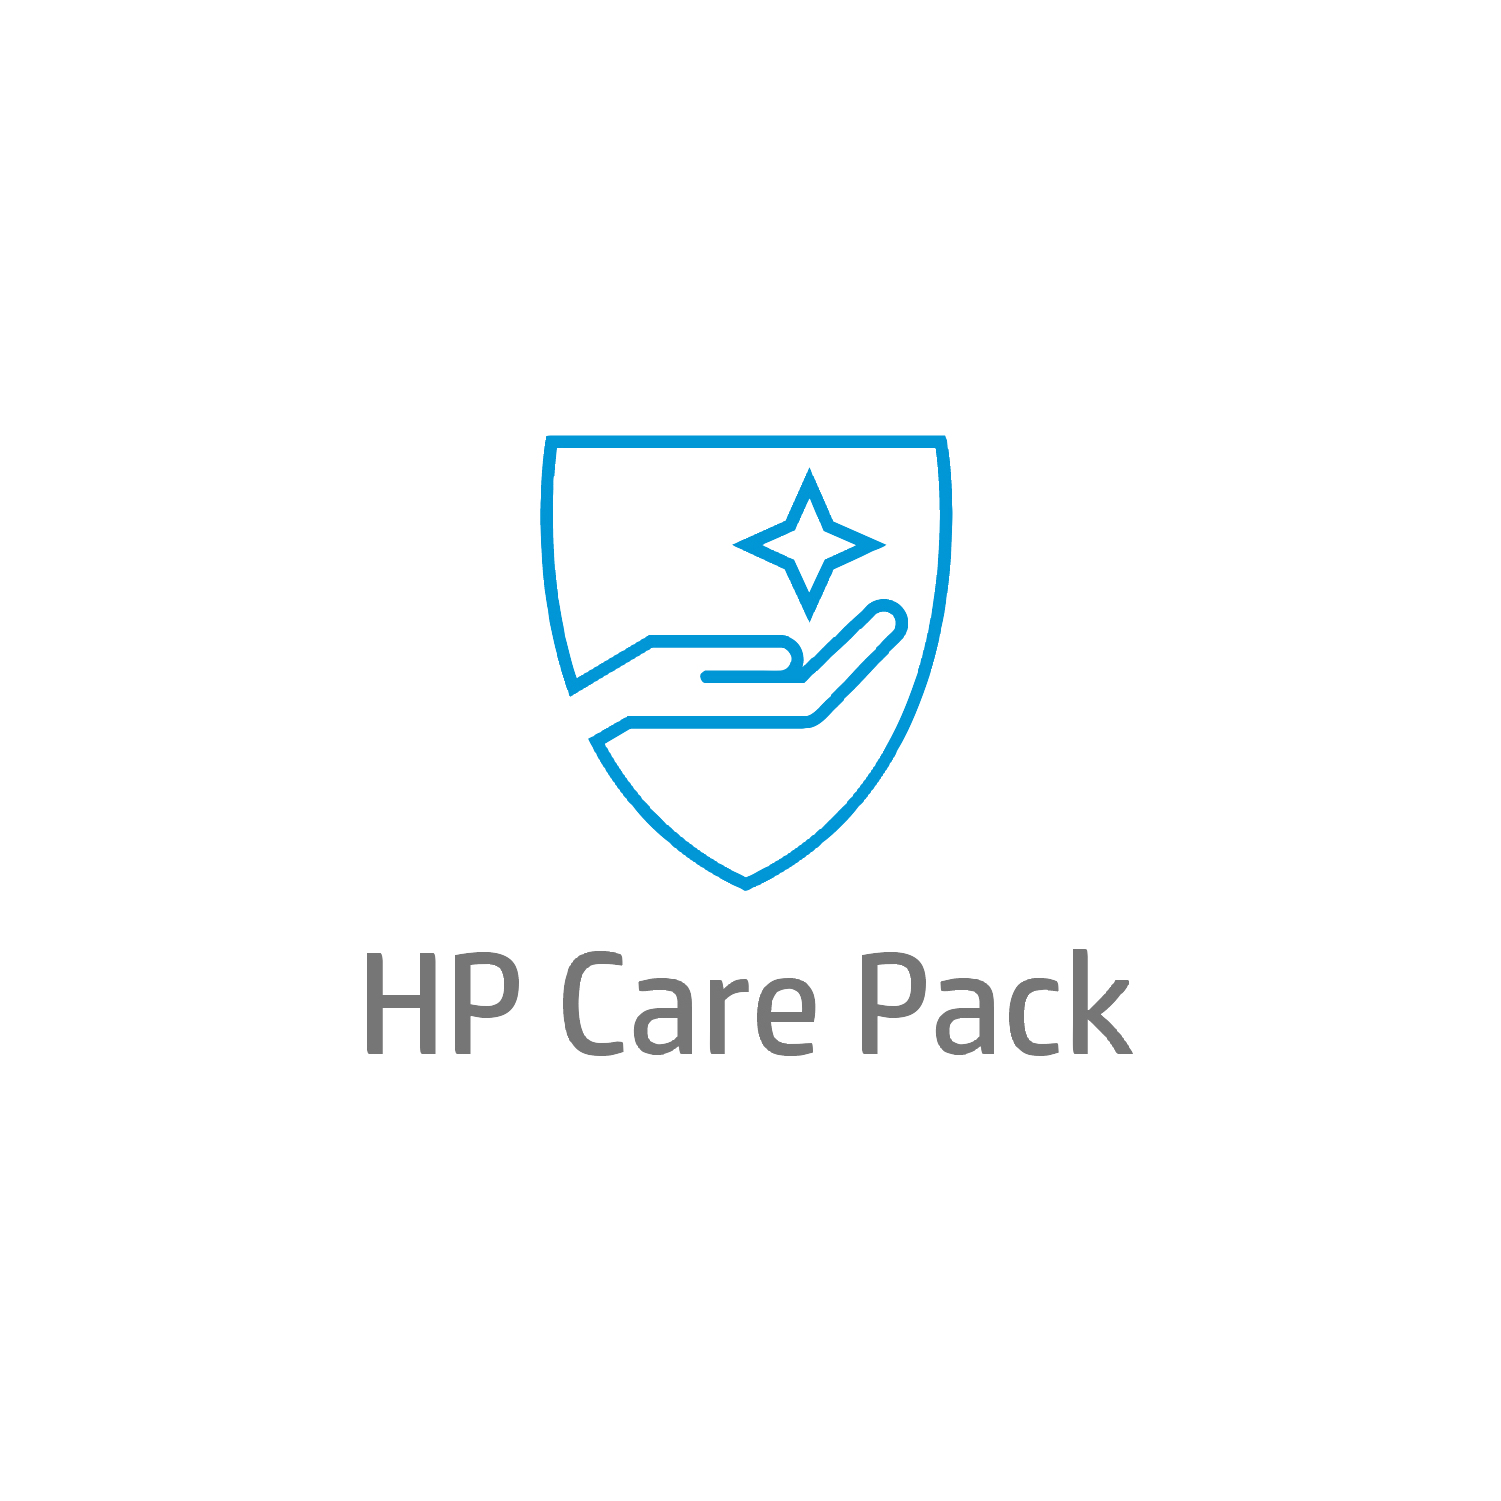 HP 3 year Care Pack w/Standard Exchange for LaserJet Printers